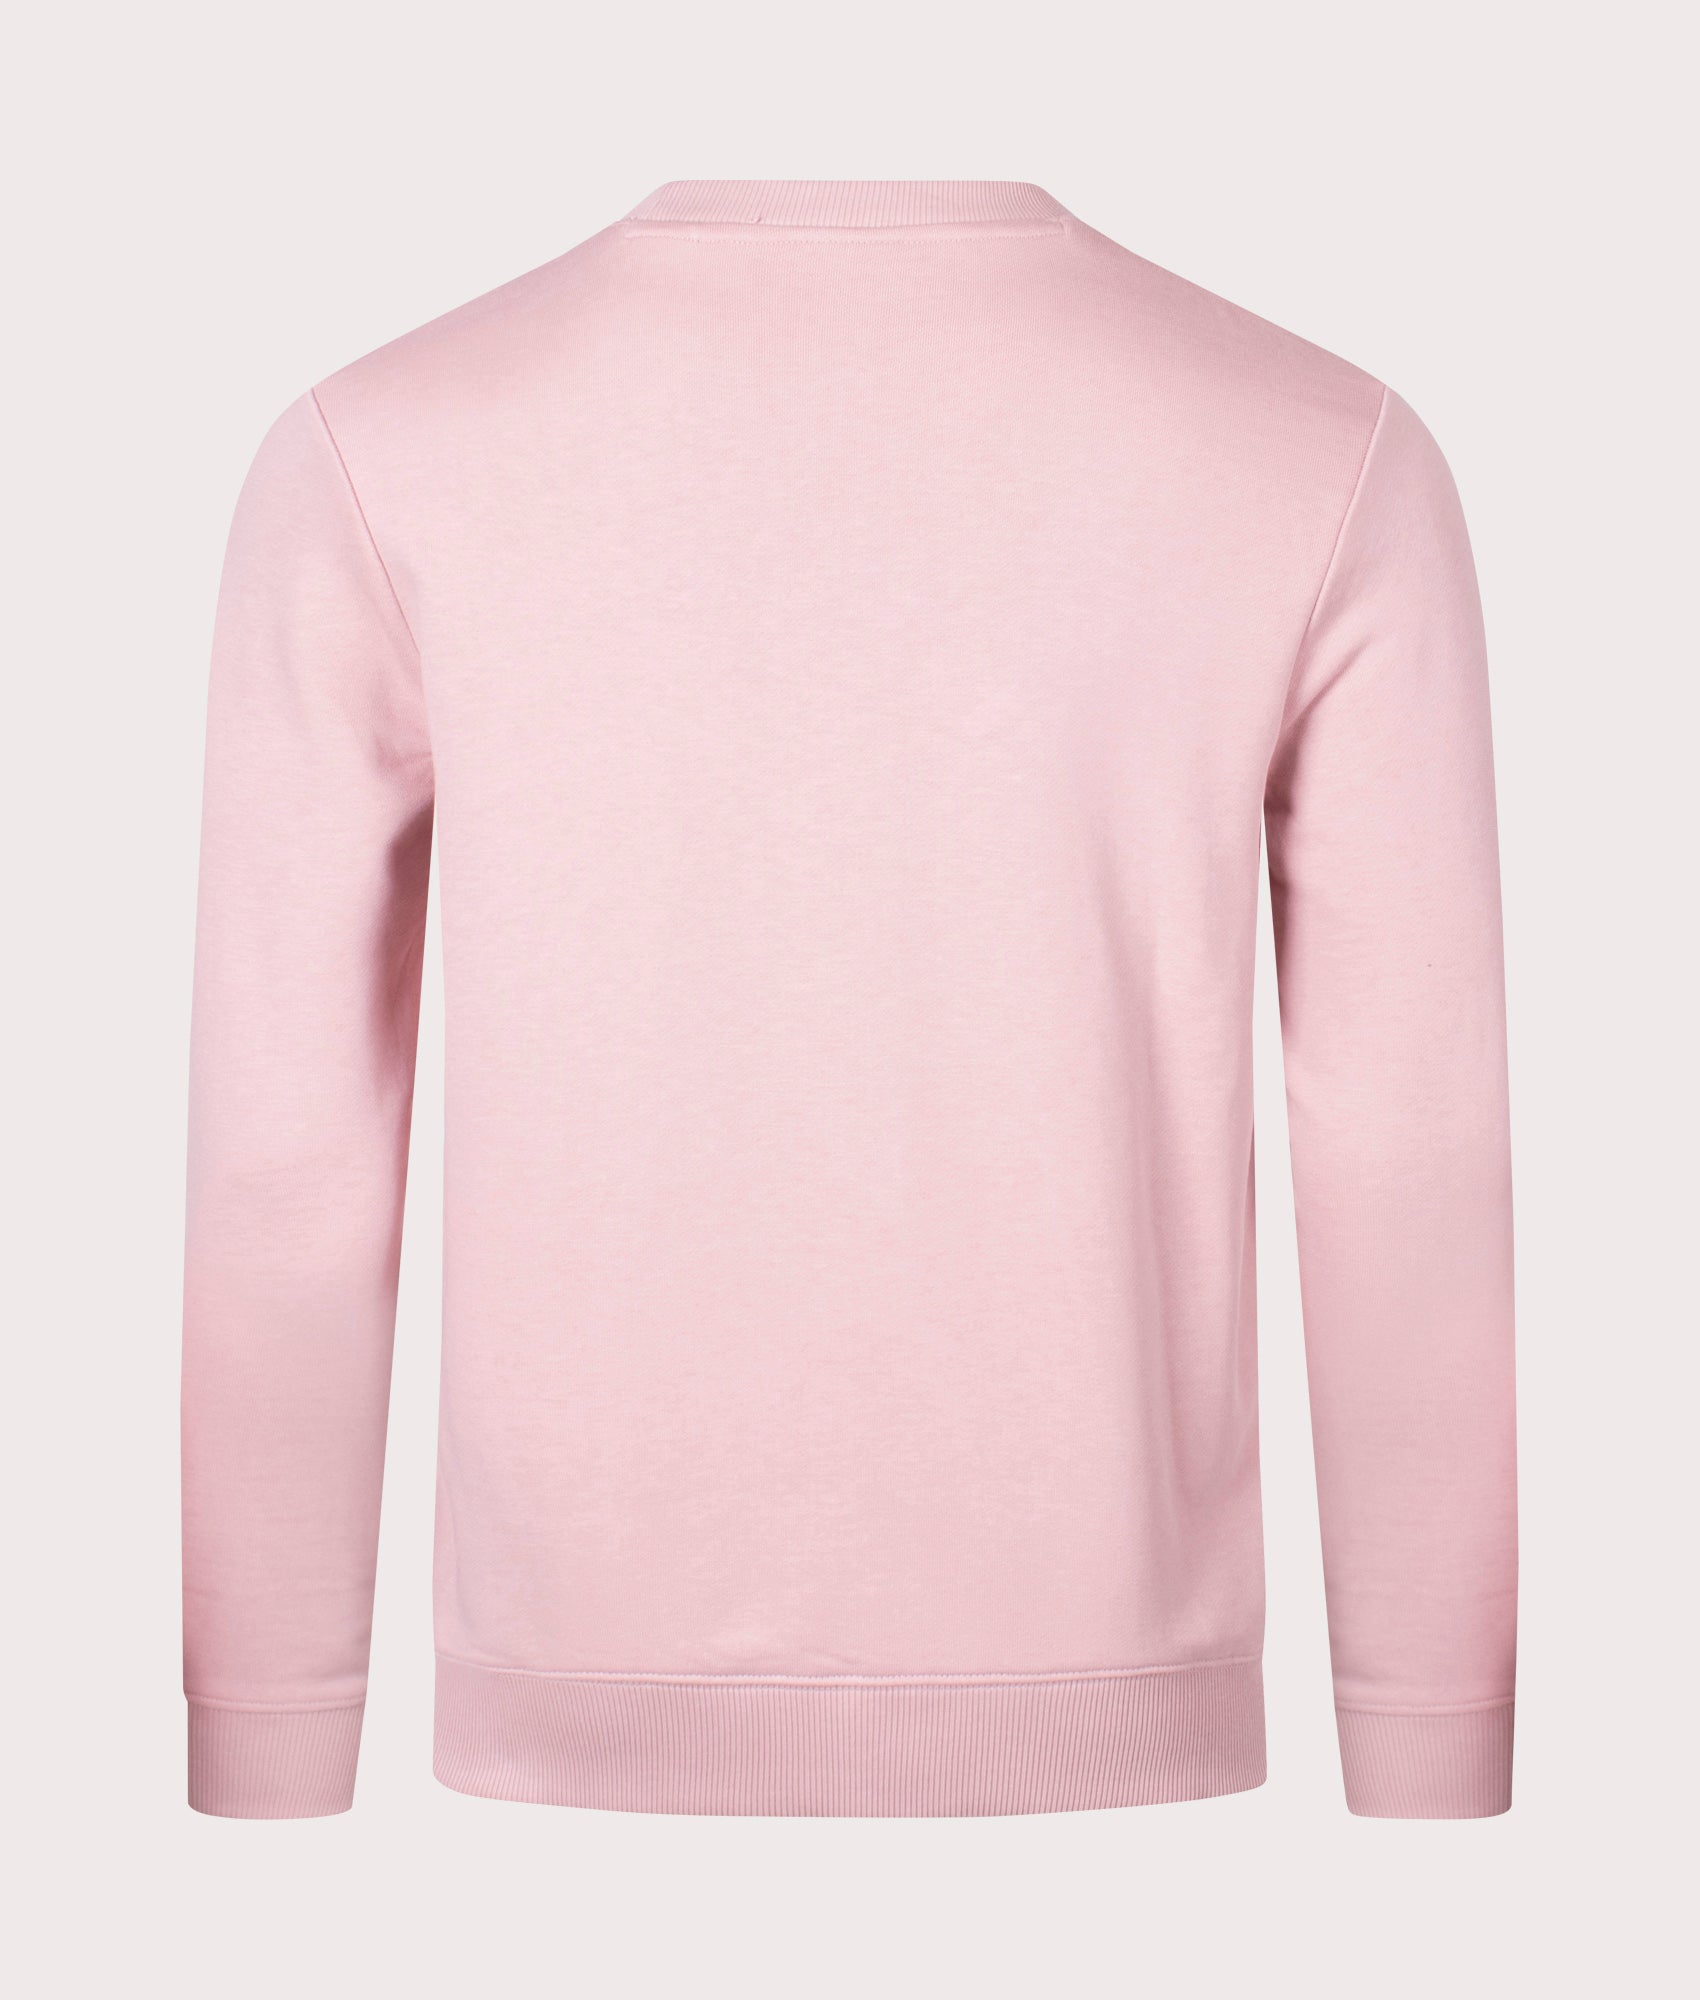 HUGO TERRY ME - Pyjamas - light/pastel pink/pink - Zalando.de